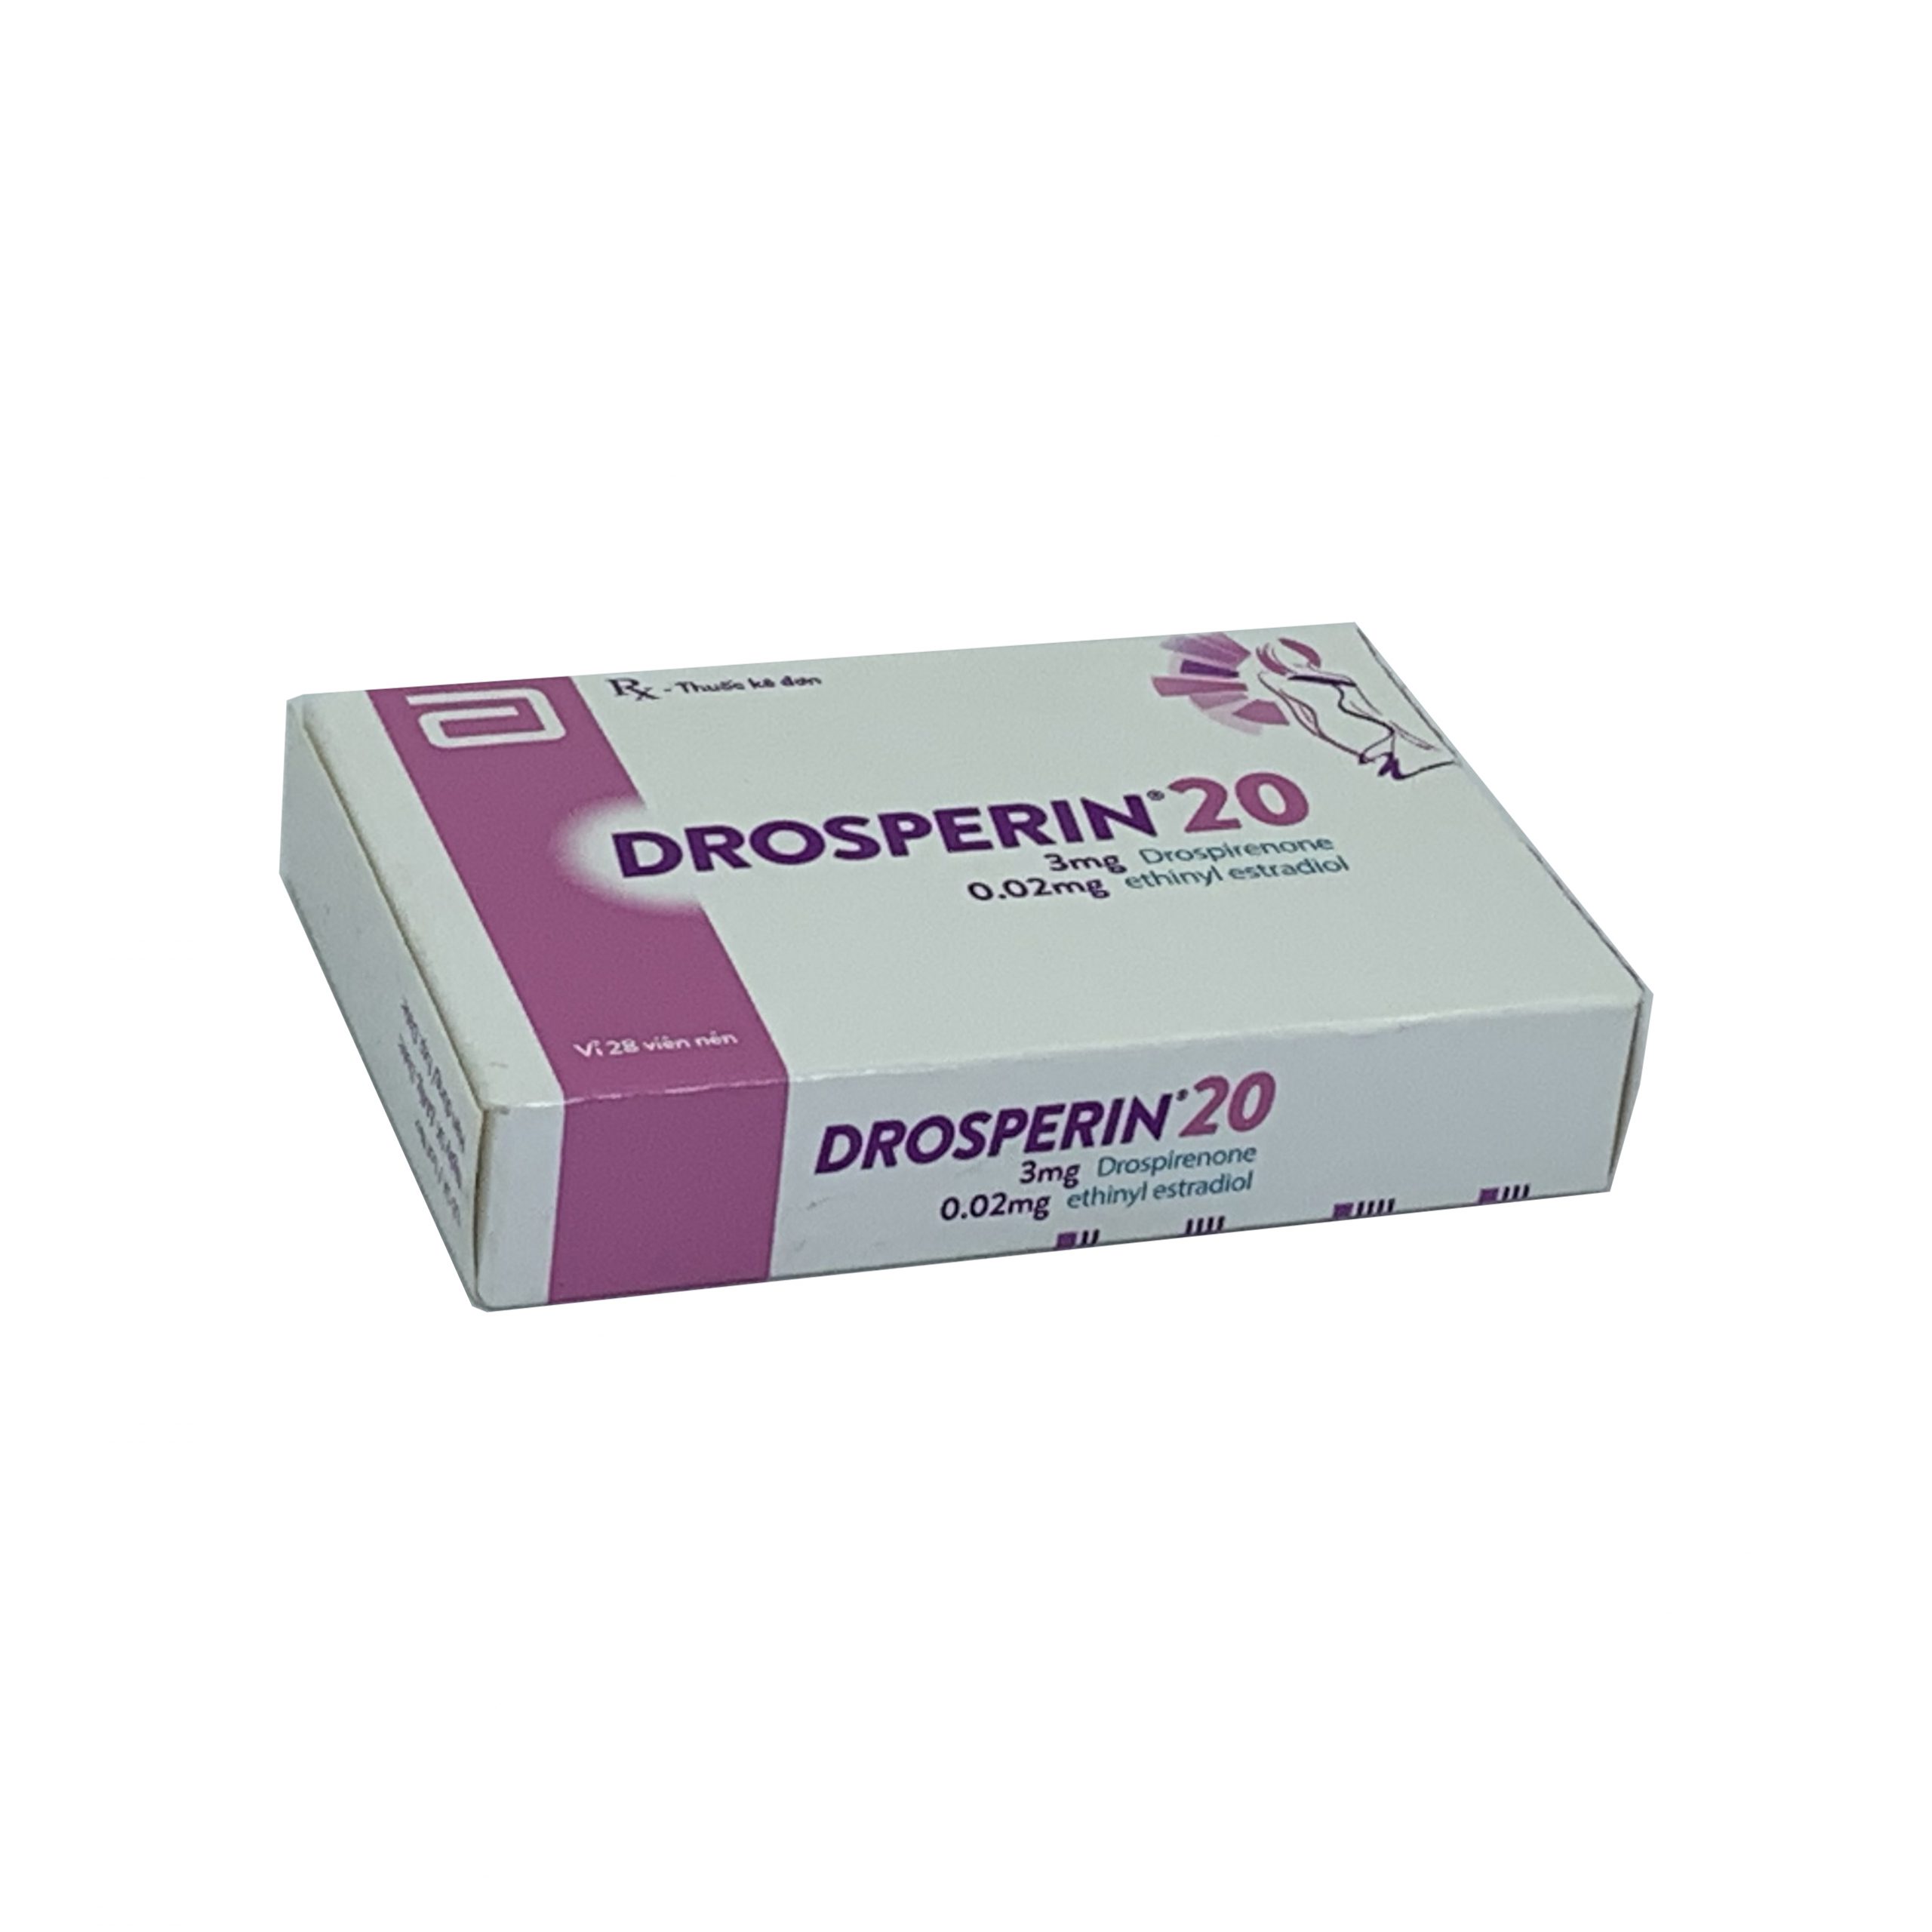 Thuốc tránh thai Drosperin 20 hồng